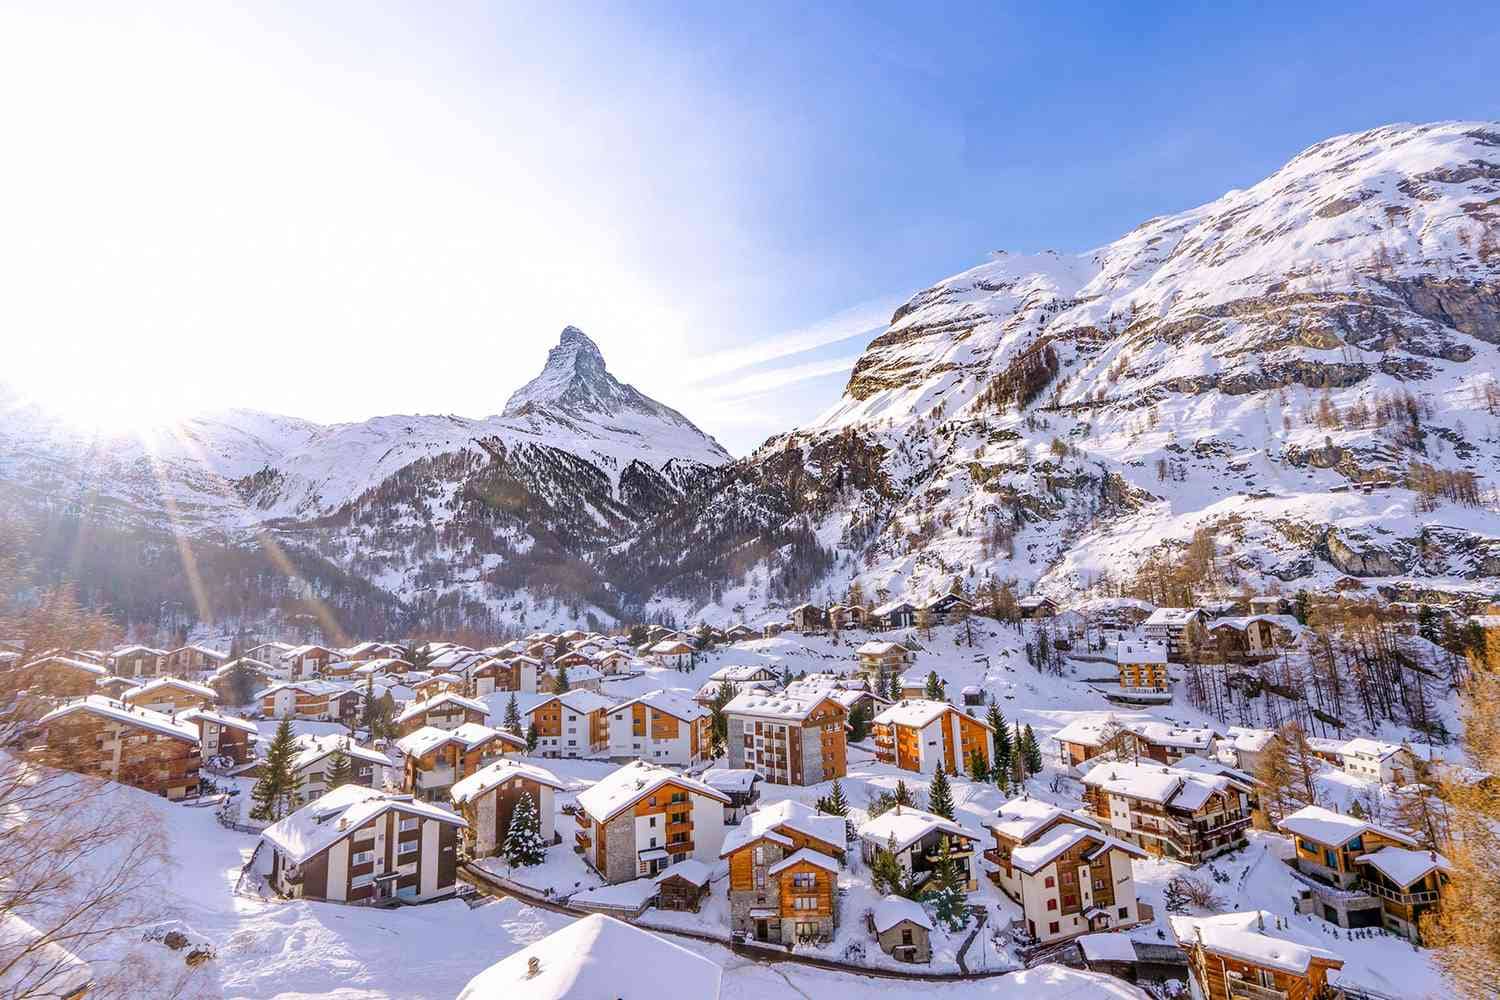 Journey to Zermatt and the Matterhorn